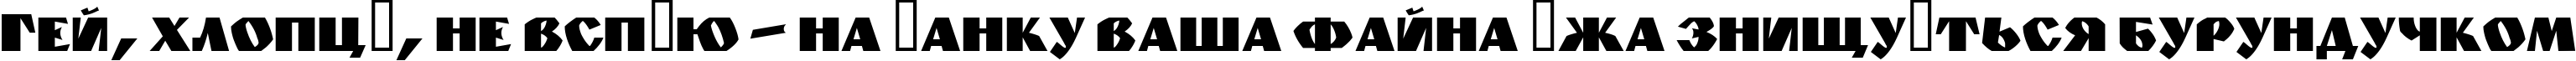 Пример написания шрифтом Monolyt_Diai текста на украинском